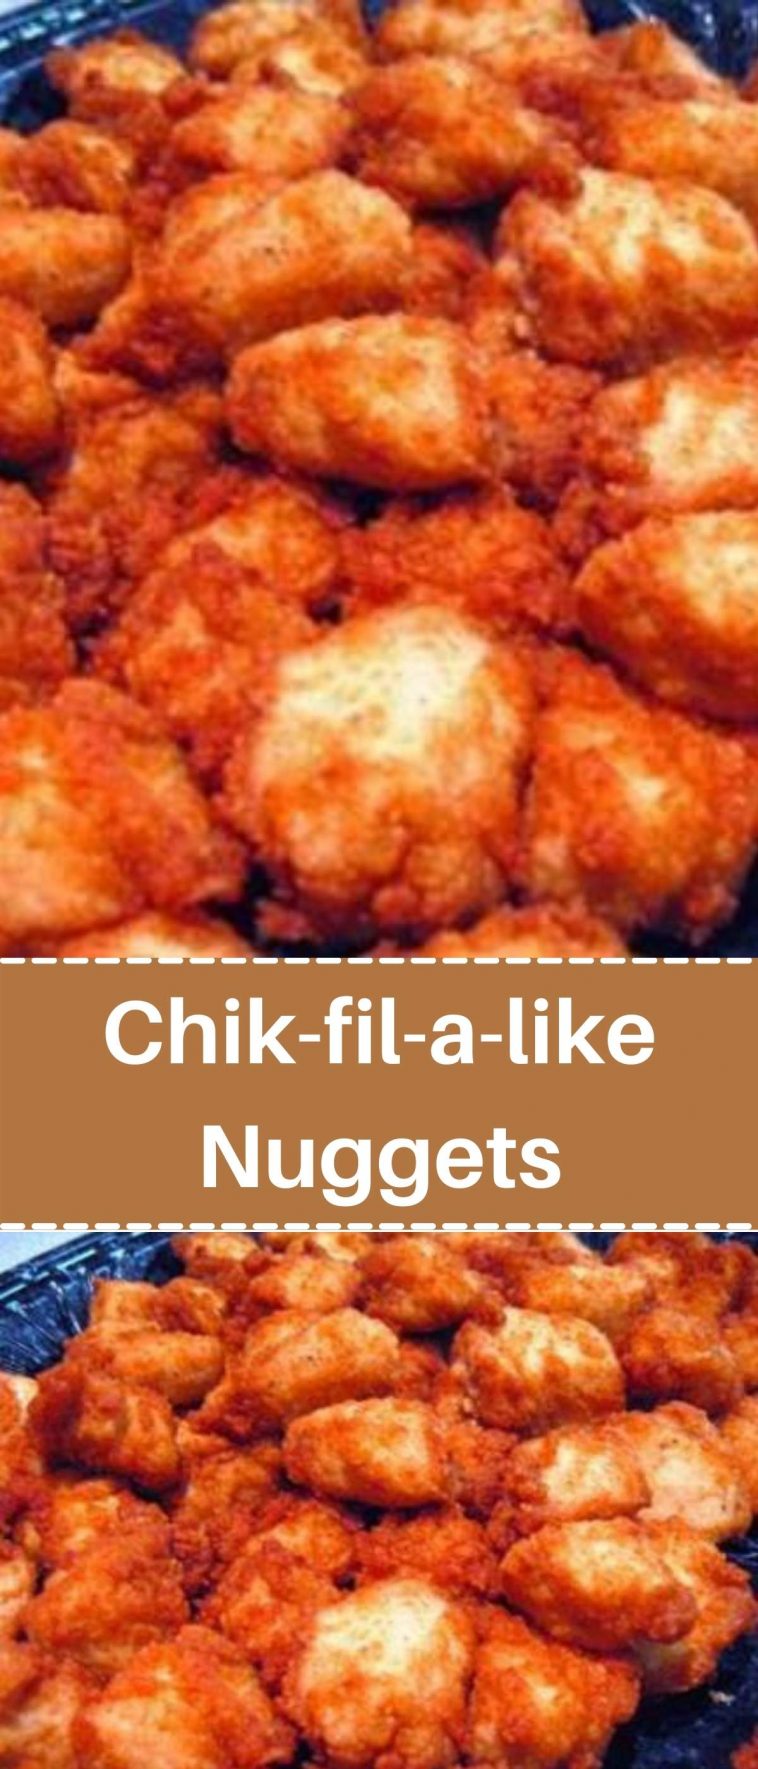 Chik-fil-a-like Nuggets